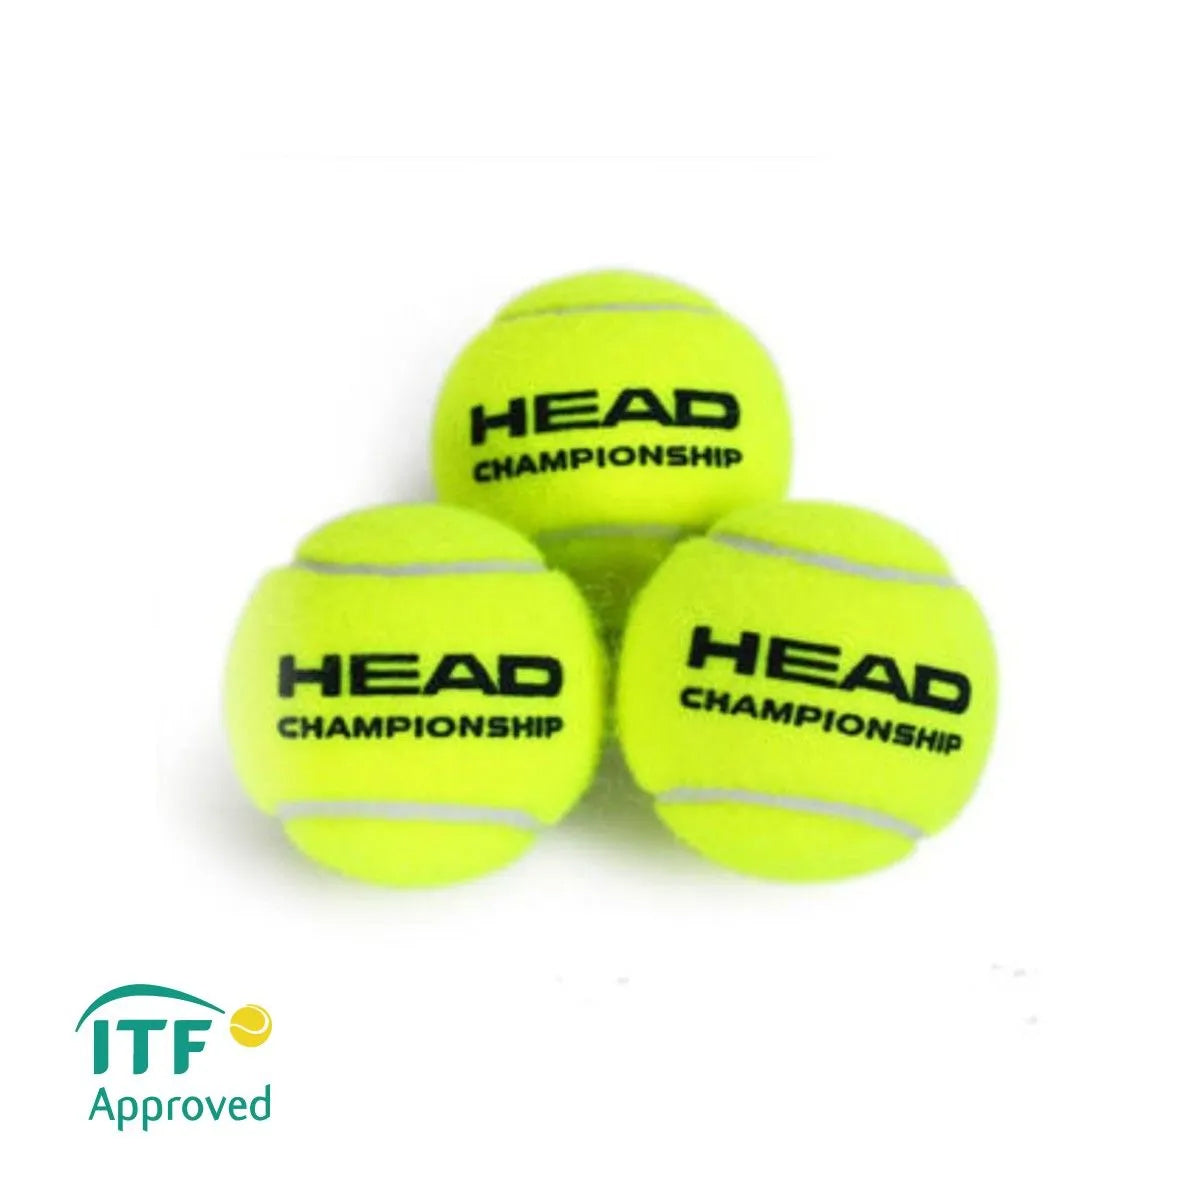 Head Championship Tennis Balls Carton (24 Cans) - Best Price online Prokicksports.com